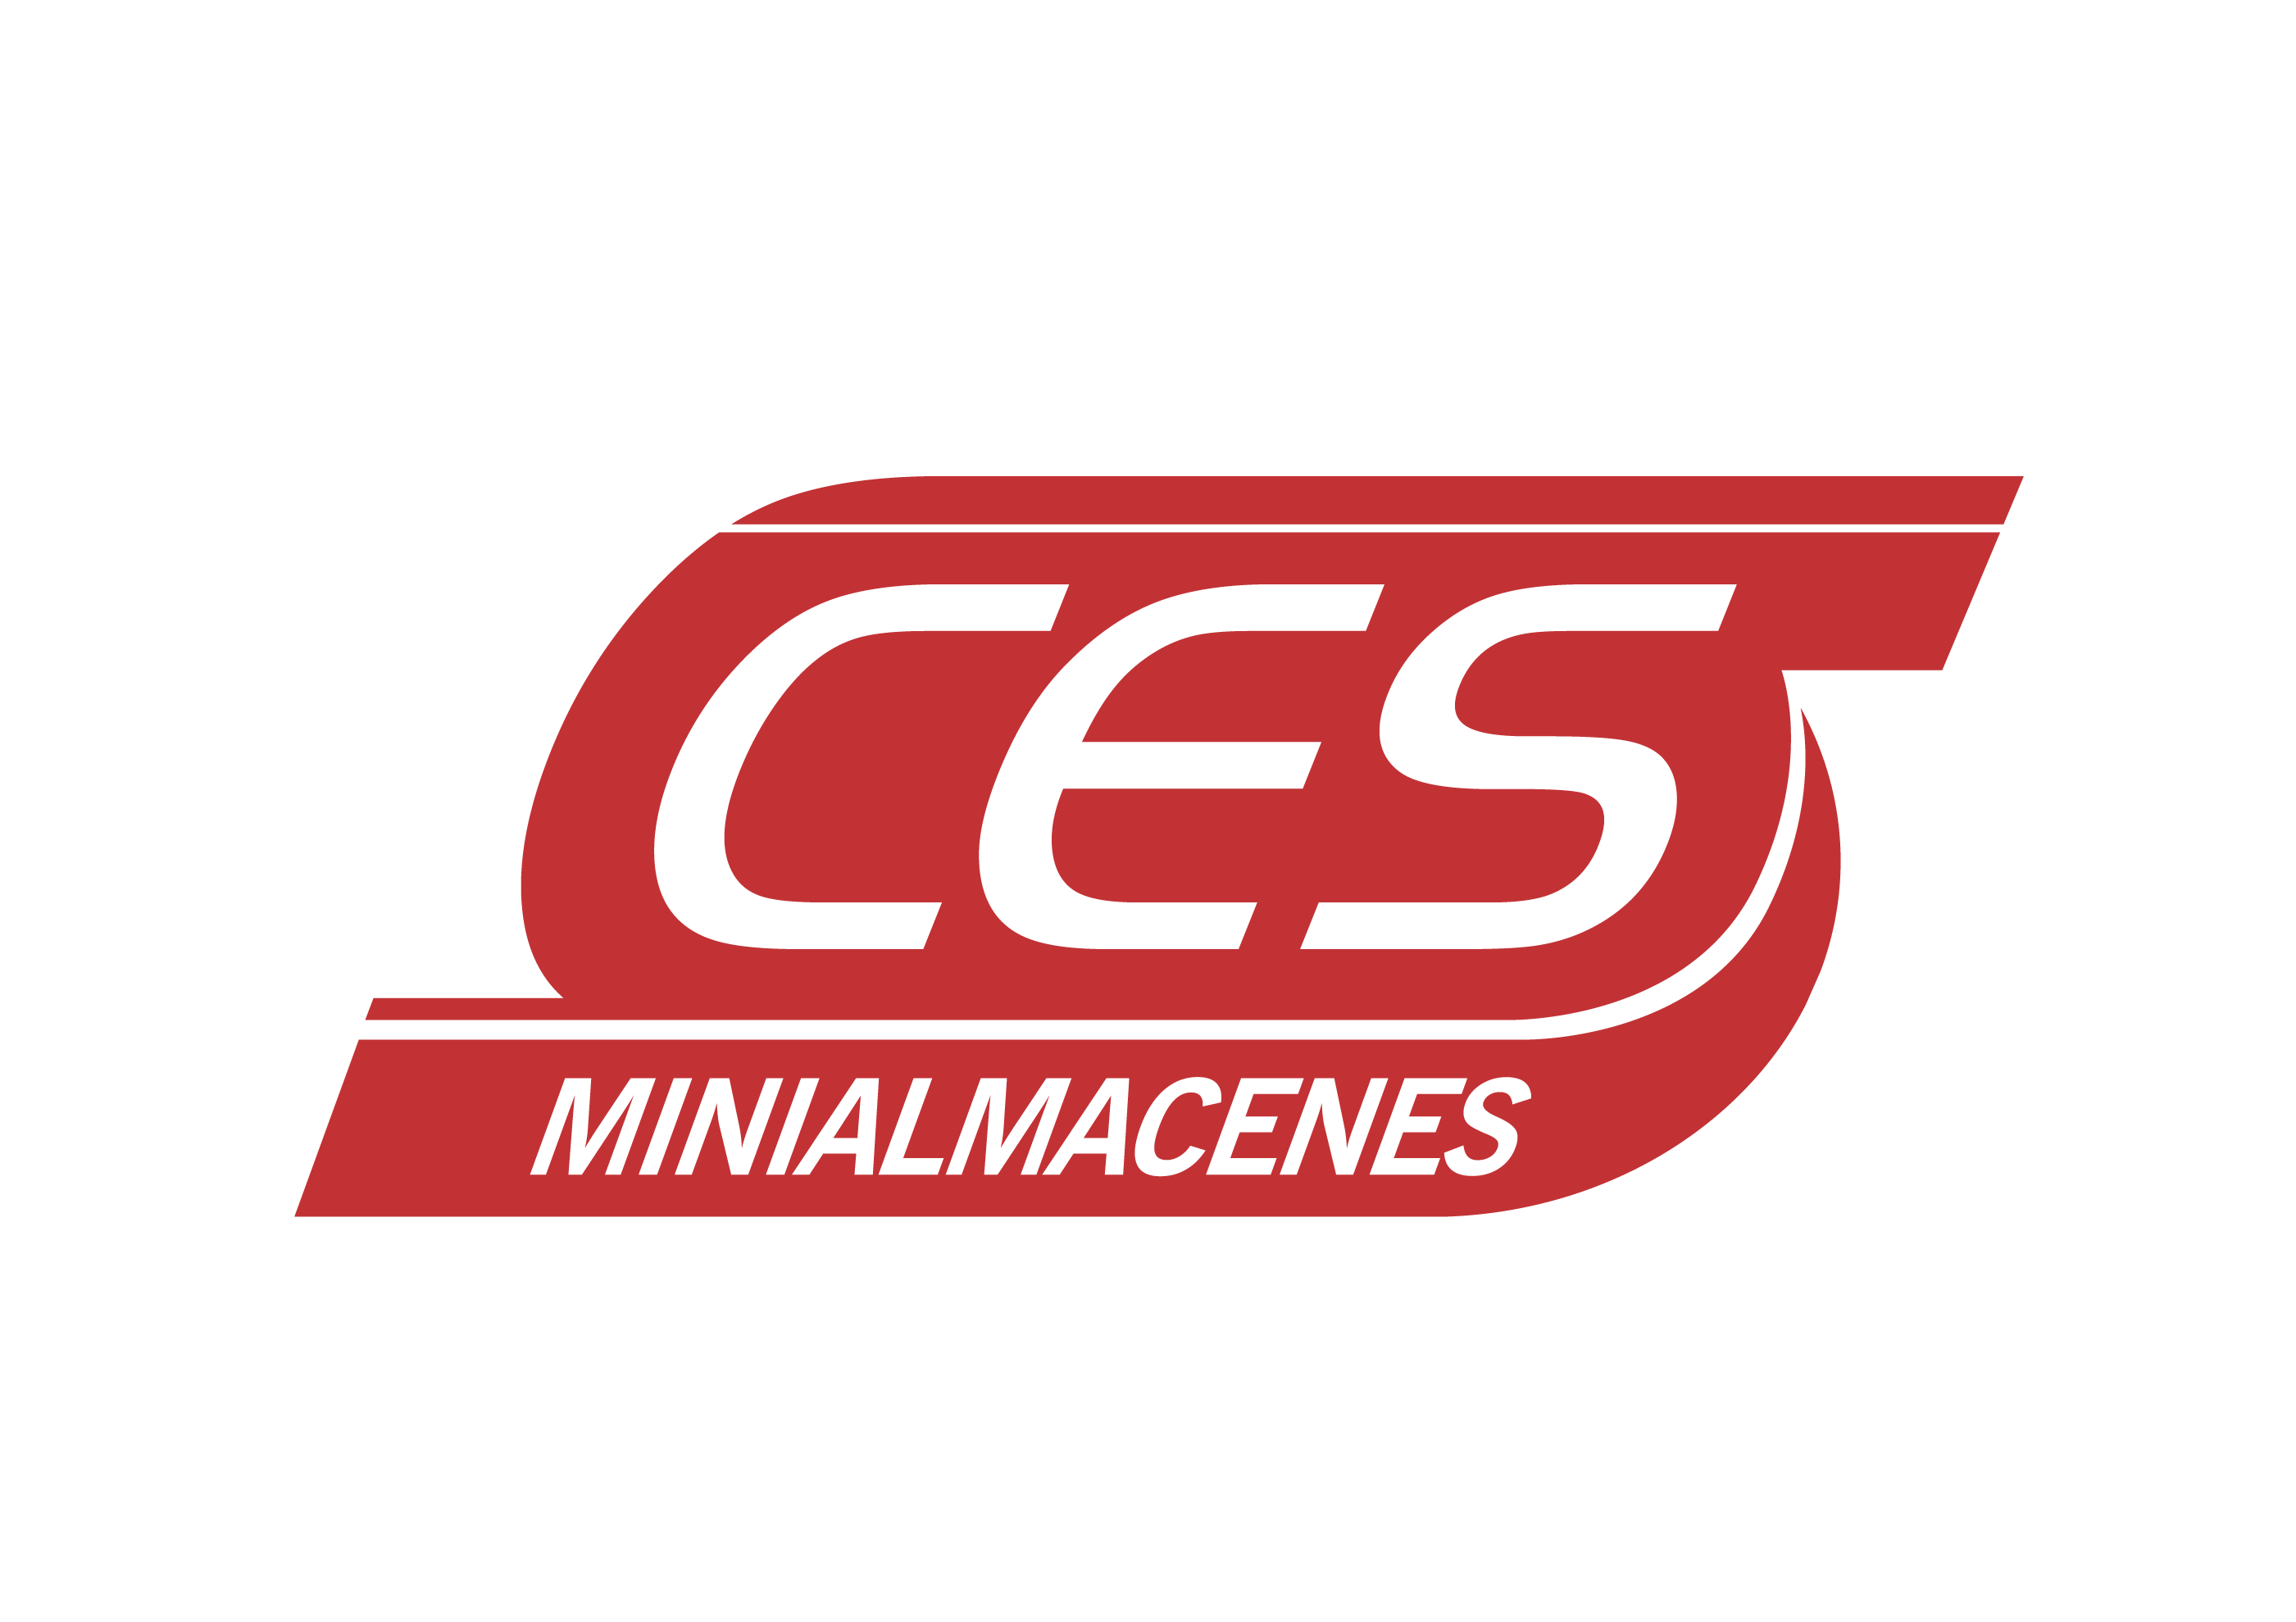 Cesminialmacenes logo